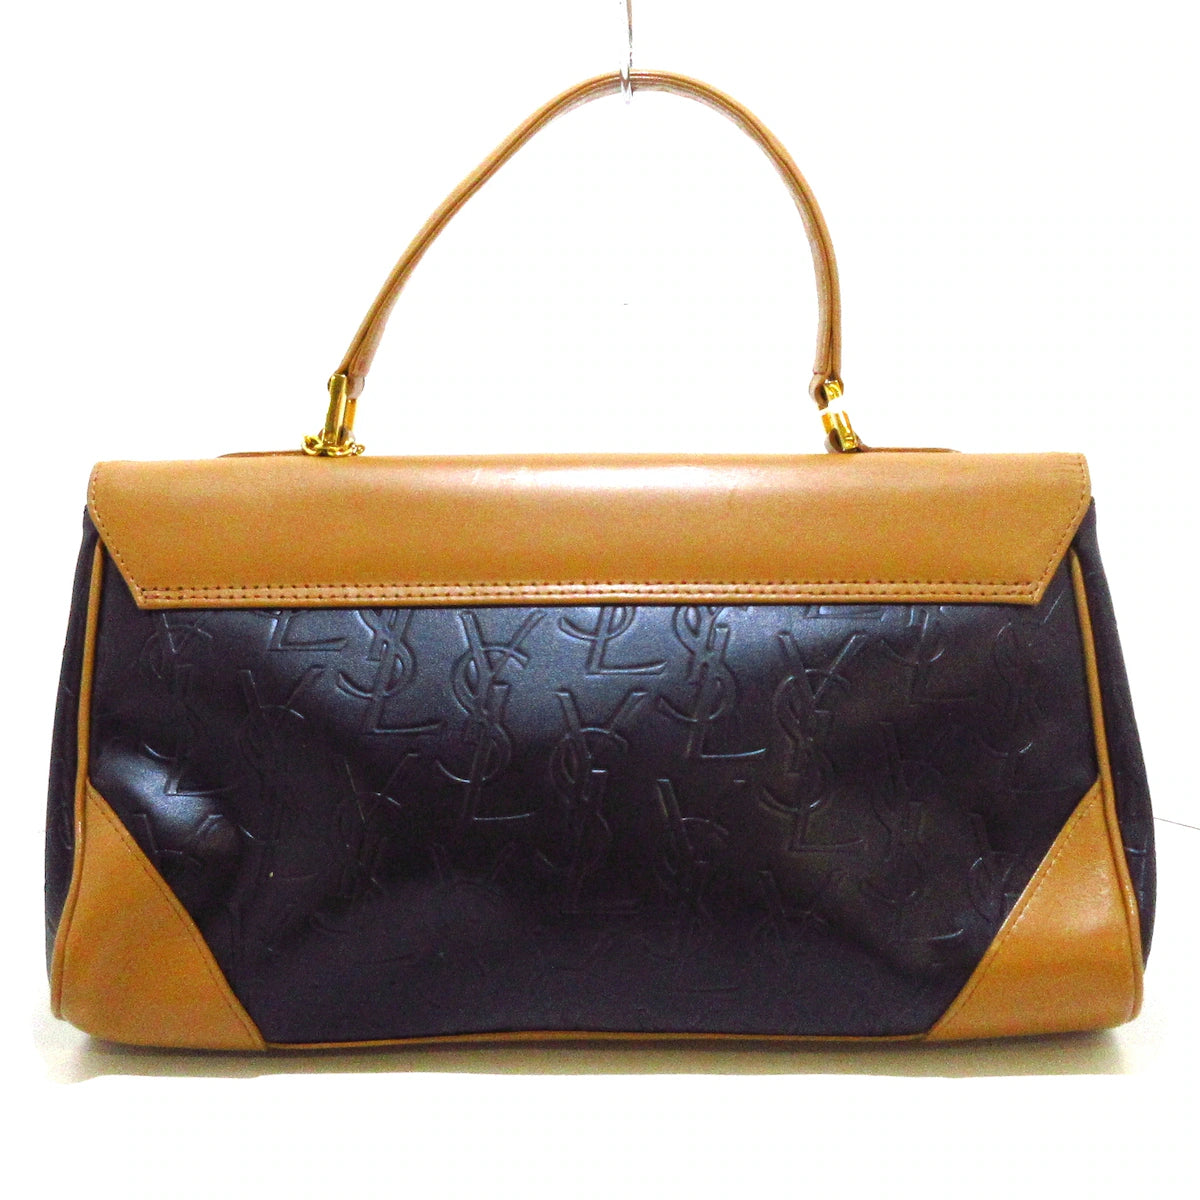 SAINT LAURENT - Handbag Black Light Brown Leather